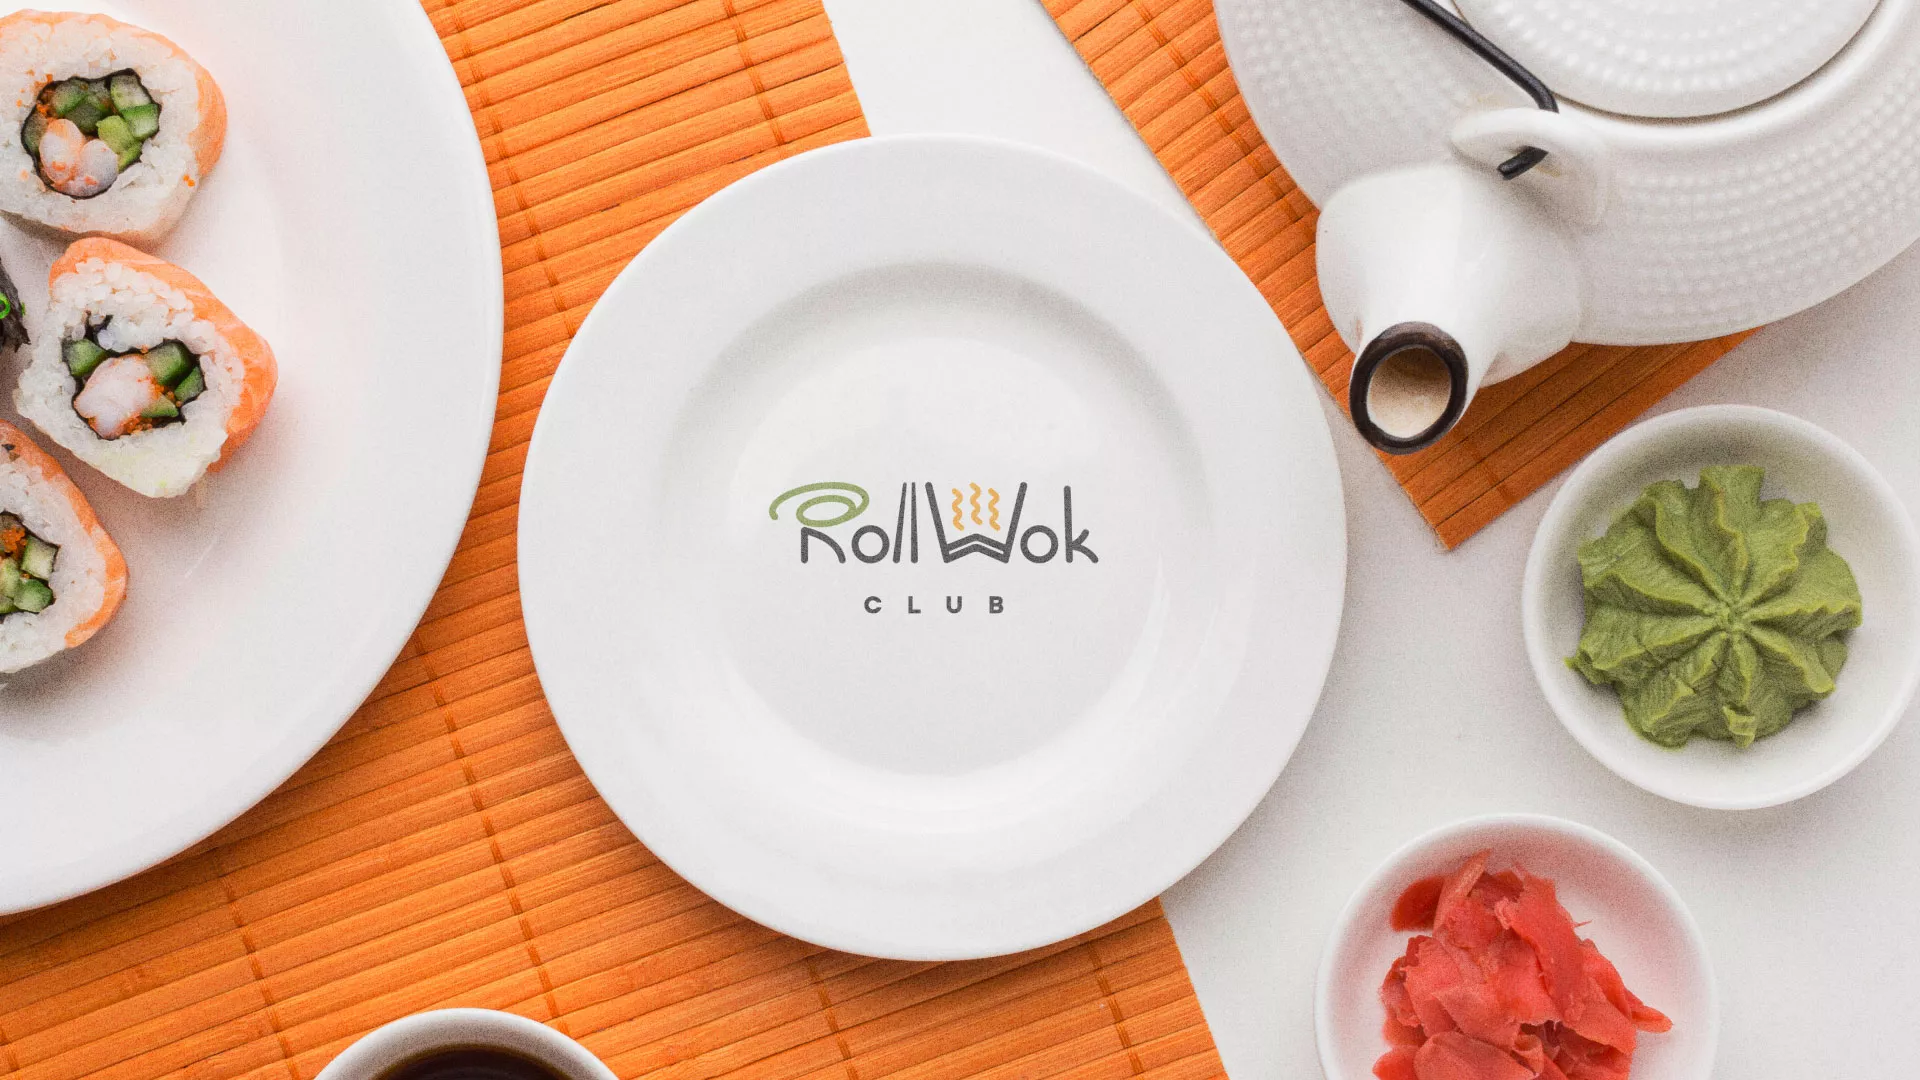 Разработка логотипа и фирменного стиля суши-бара «Roll Wok Club» в Зее